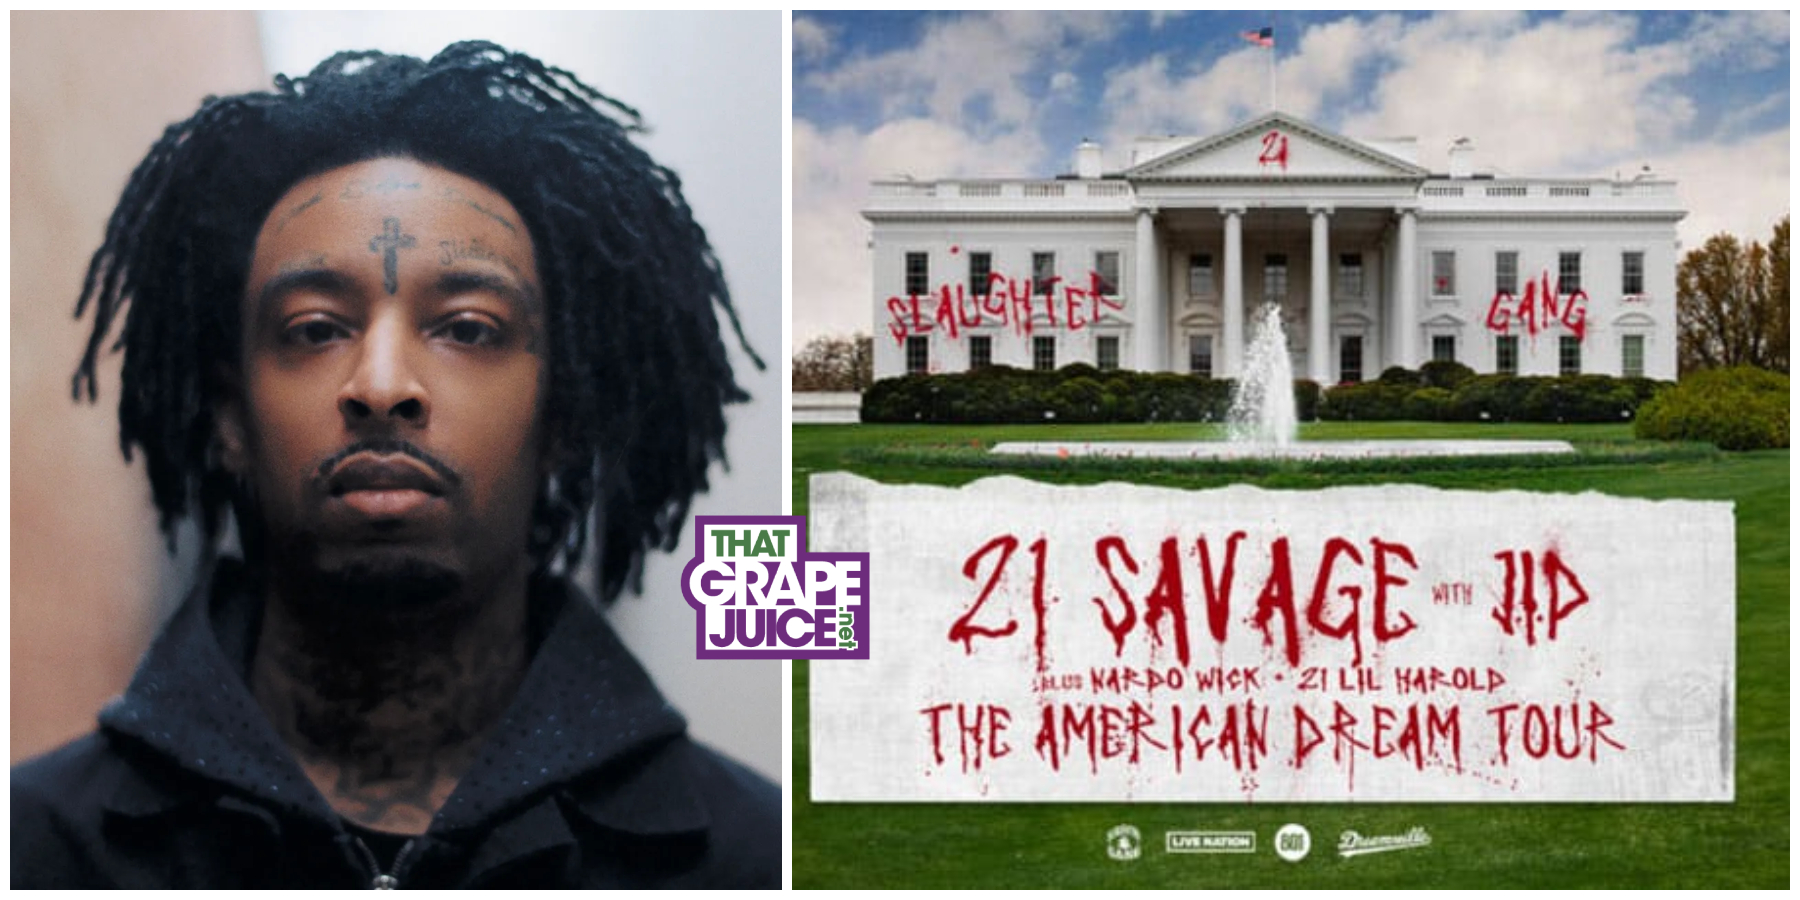 21 Savage Announces the ‘American Dream Tour’ Featuring JID, Nardo Wick, & 21 Lil Harold